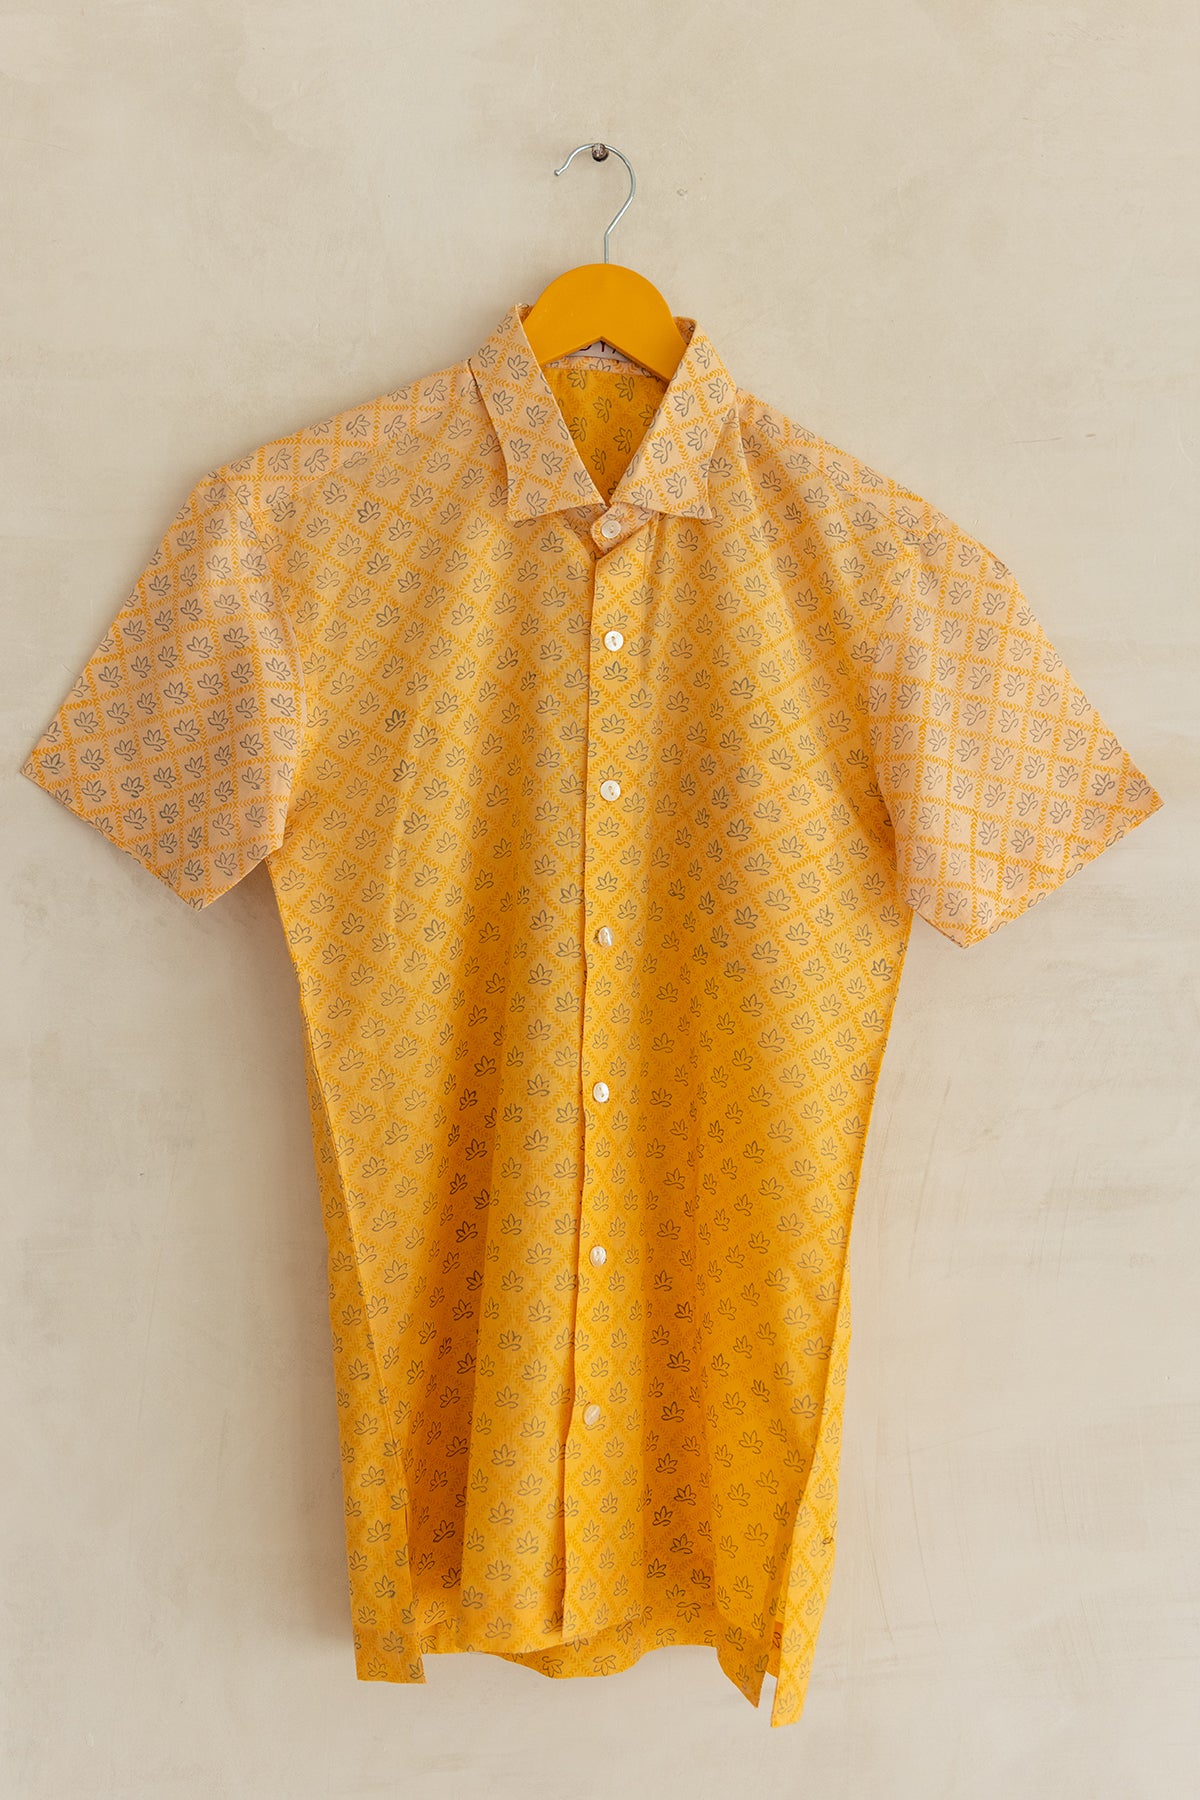 Orange Squash Men's Shirt